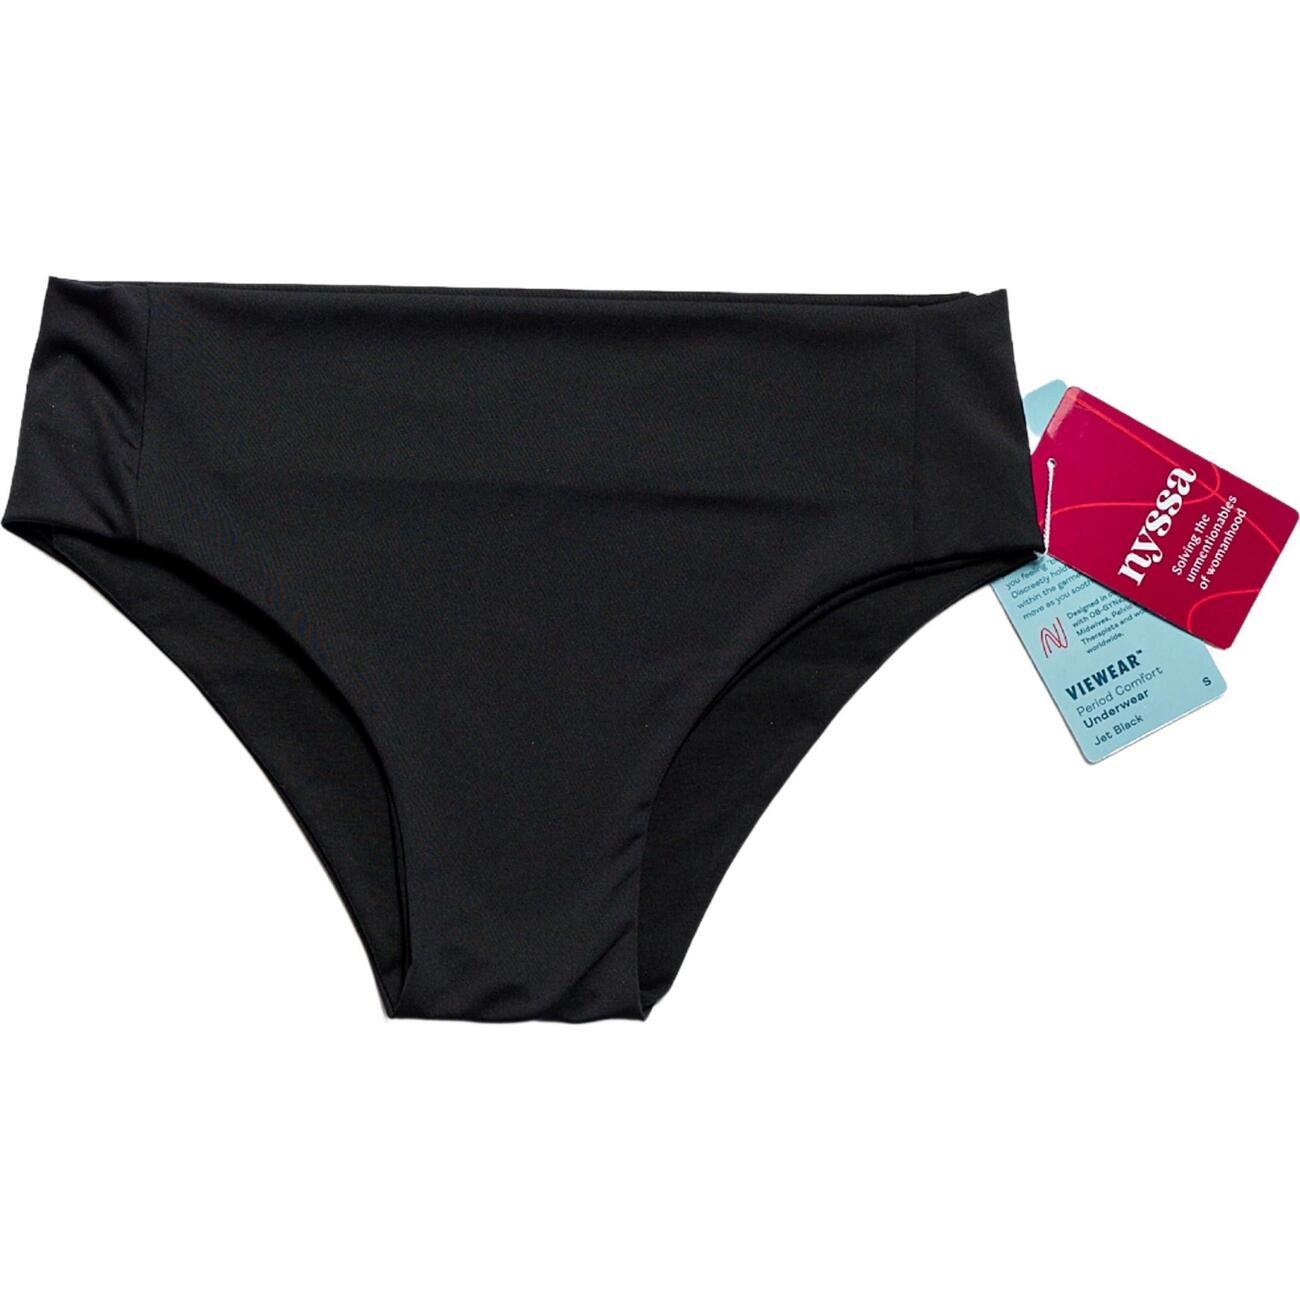 VieWear Period Comfort Underwear, Black - Nyssa Period Care